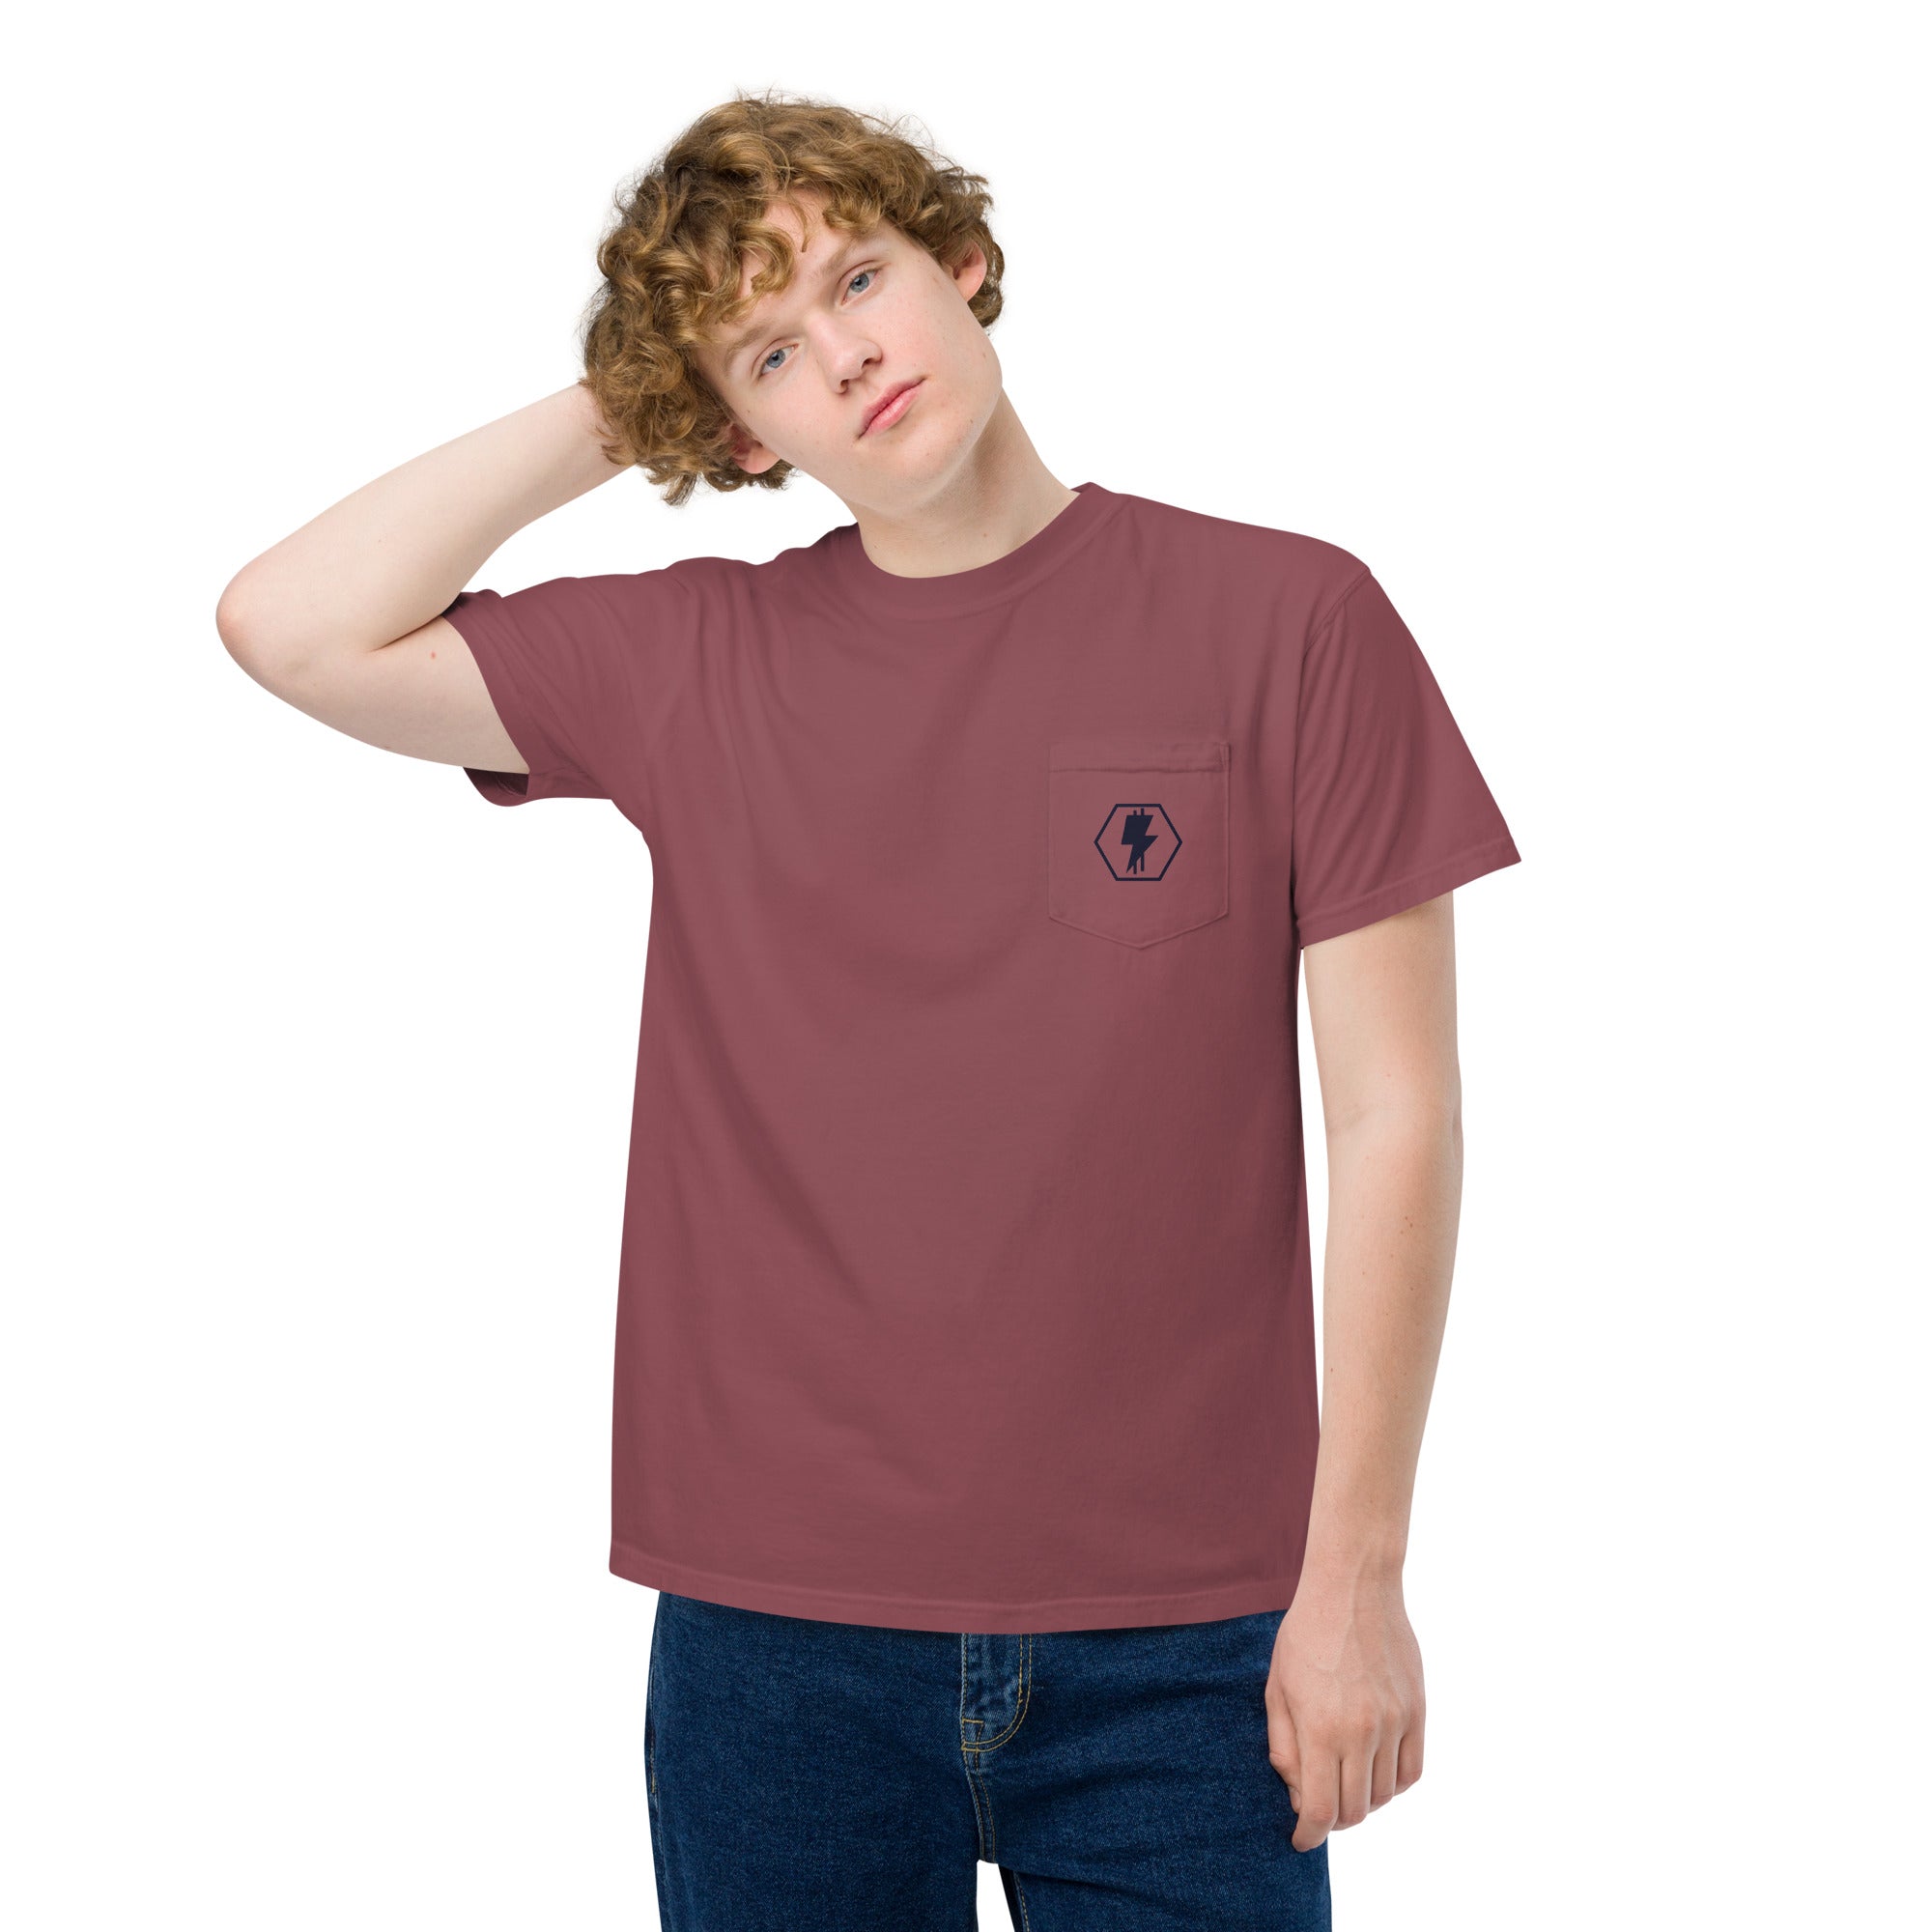 'Gangg Signs' Unisex Garment-Dyed Pocket T-Shirt